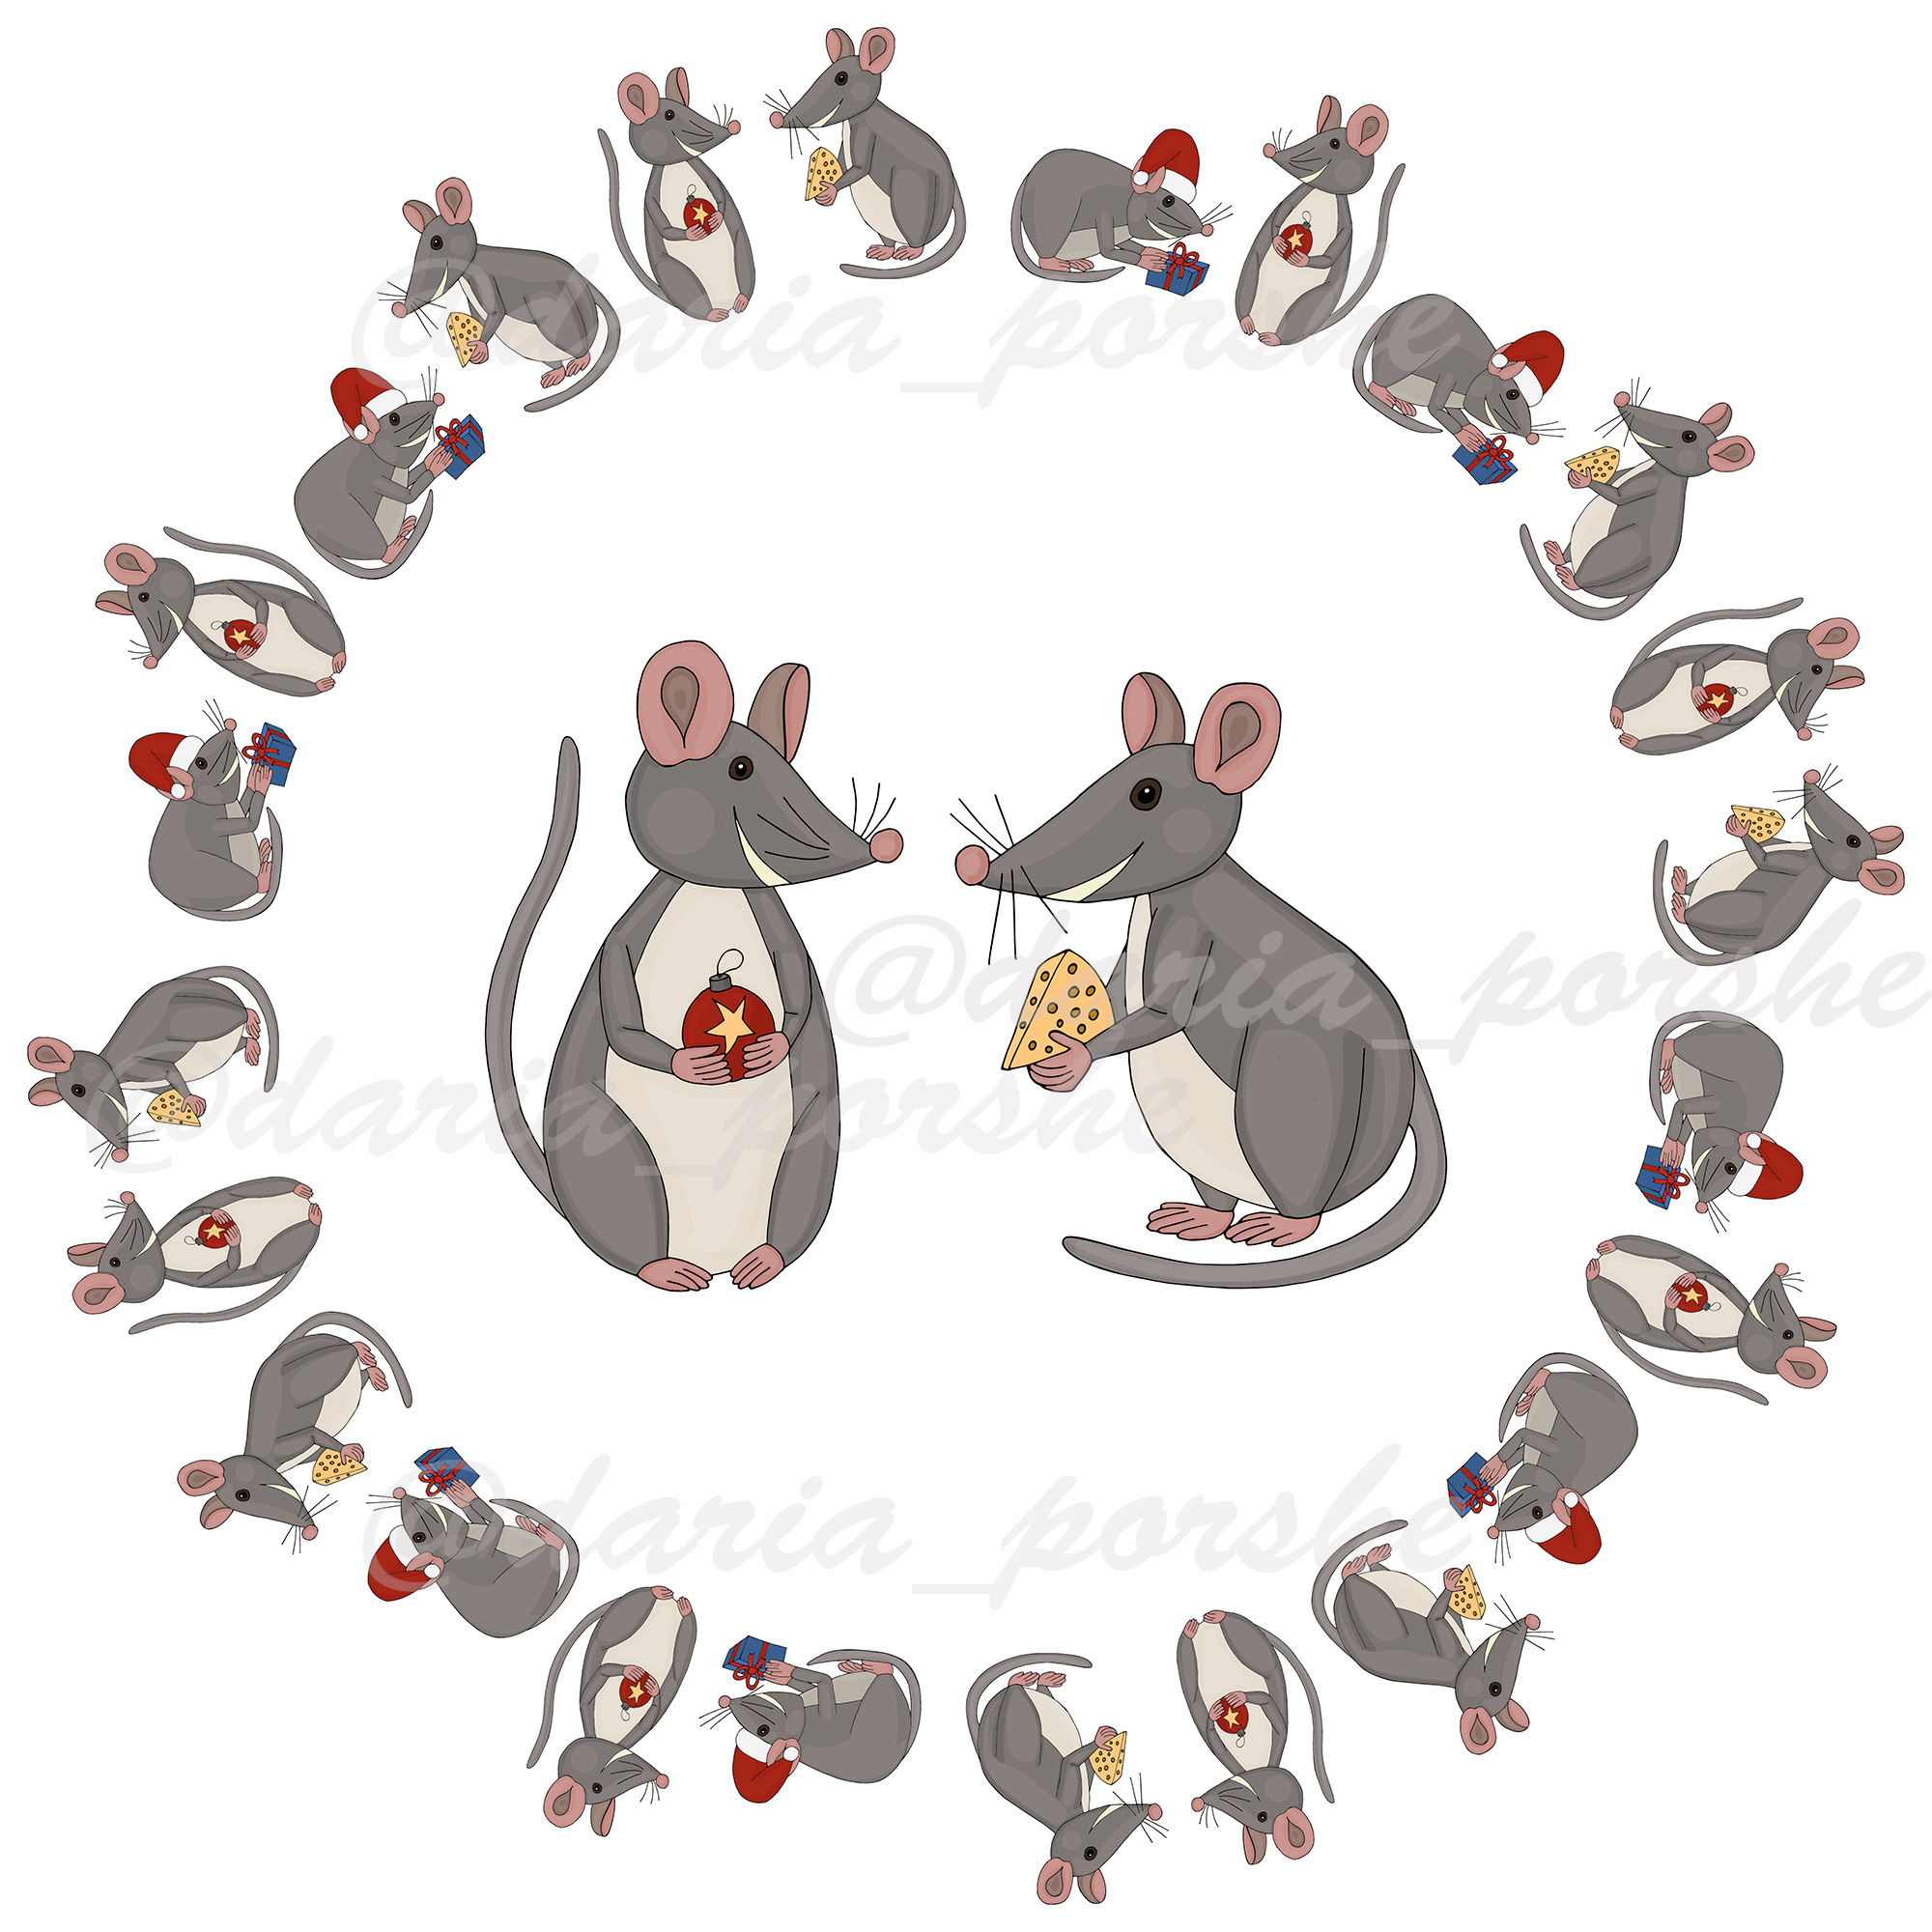 New year two rat mice in a circle of mice %d0%b4%d0%bb%d1%8f %d0%b8%d0%bd%d1%81%d1%82